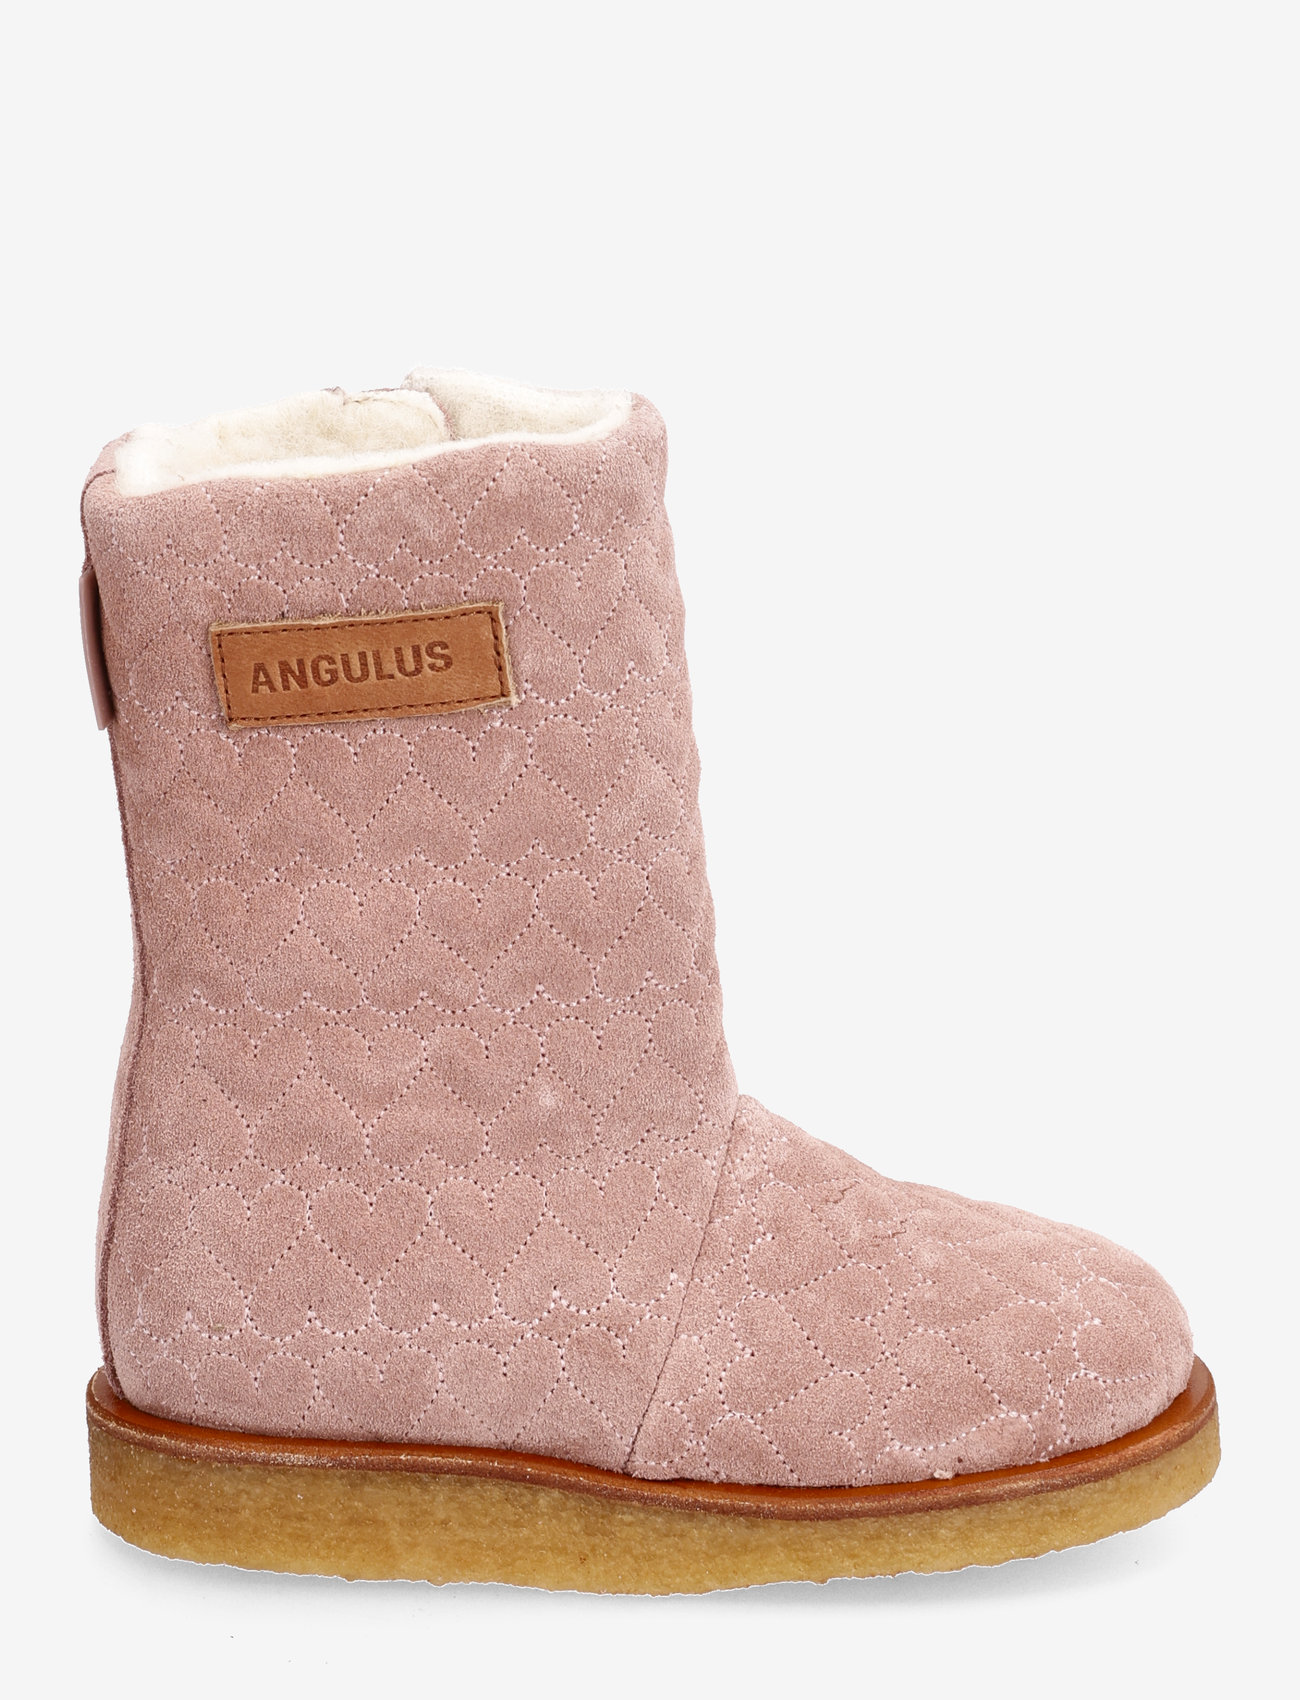 ANGULUS - Boots - flat - with zipper - kids - 1773/1789 pale rose/cognac - 1